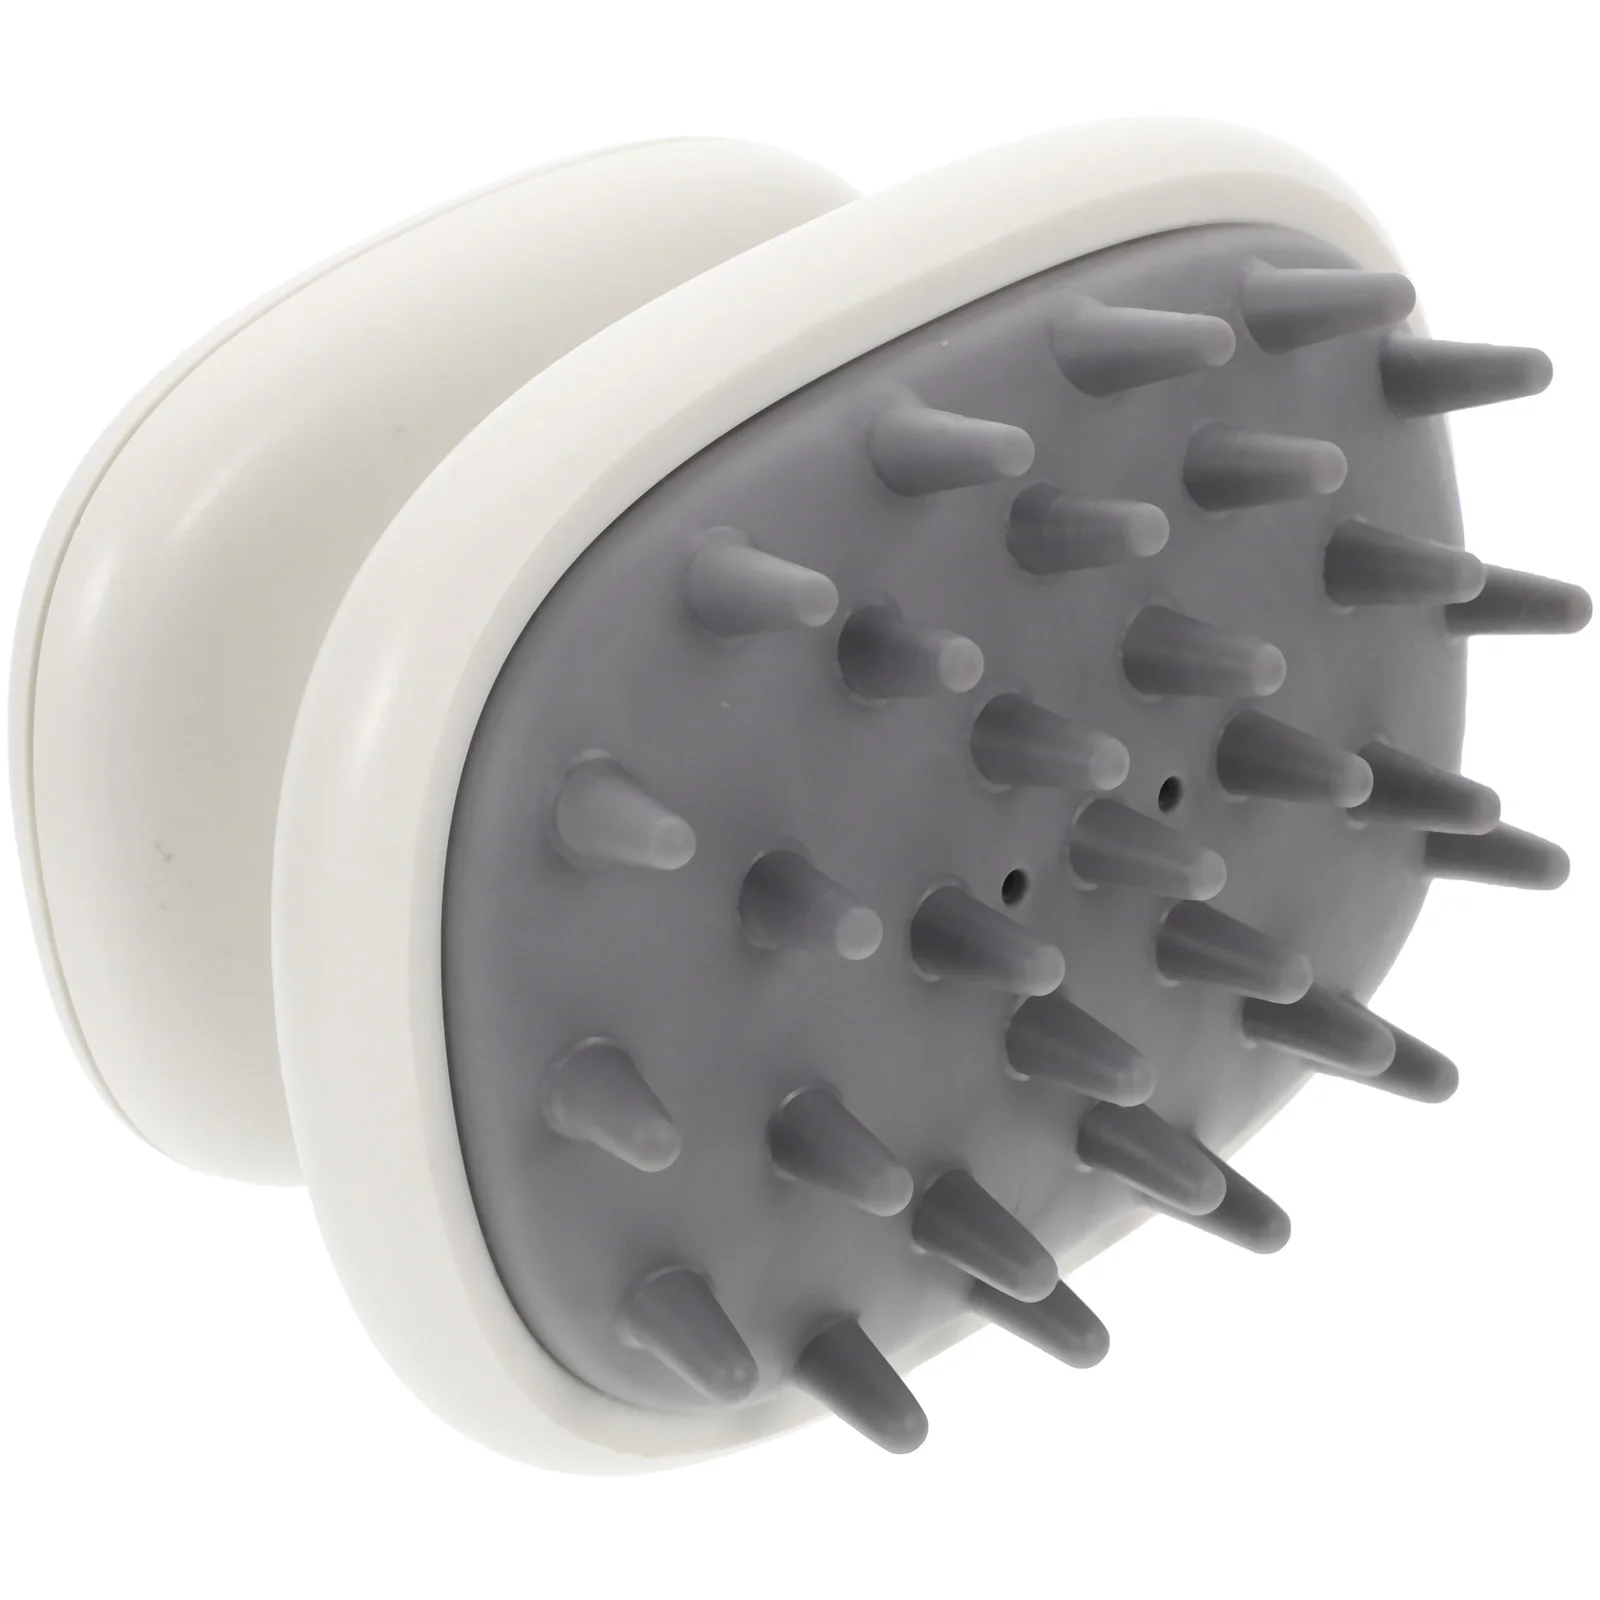 

Shampoo Brush Shower Scalp Massager Dandruff Hair Care Silicone Body Scrubber Men Exfoliate Comb Exfoliator